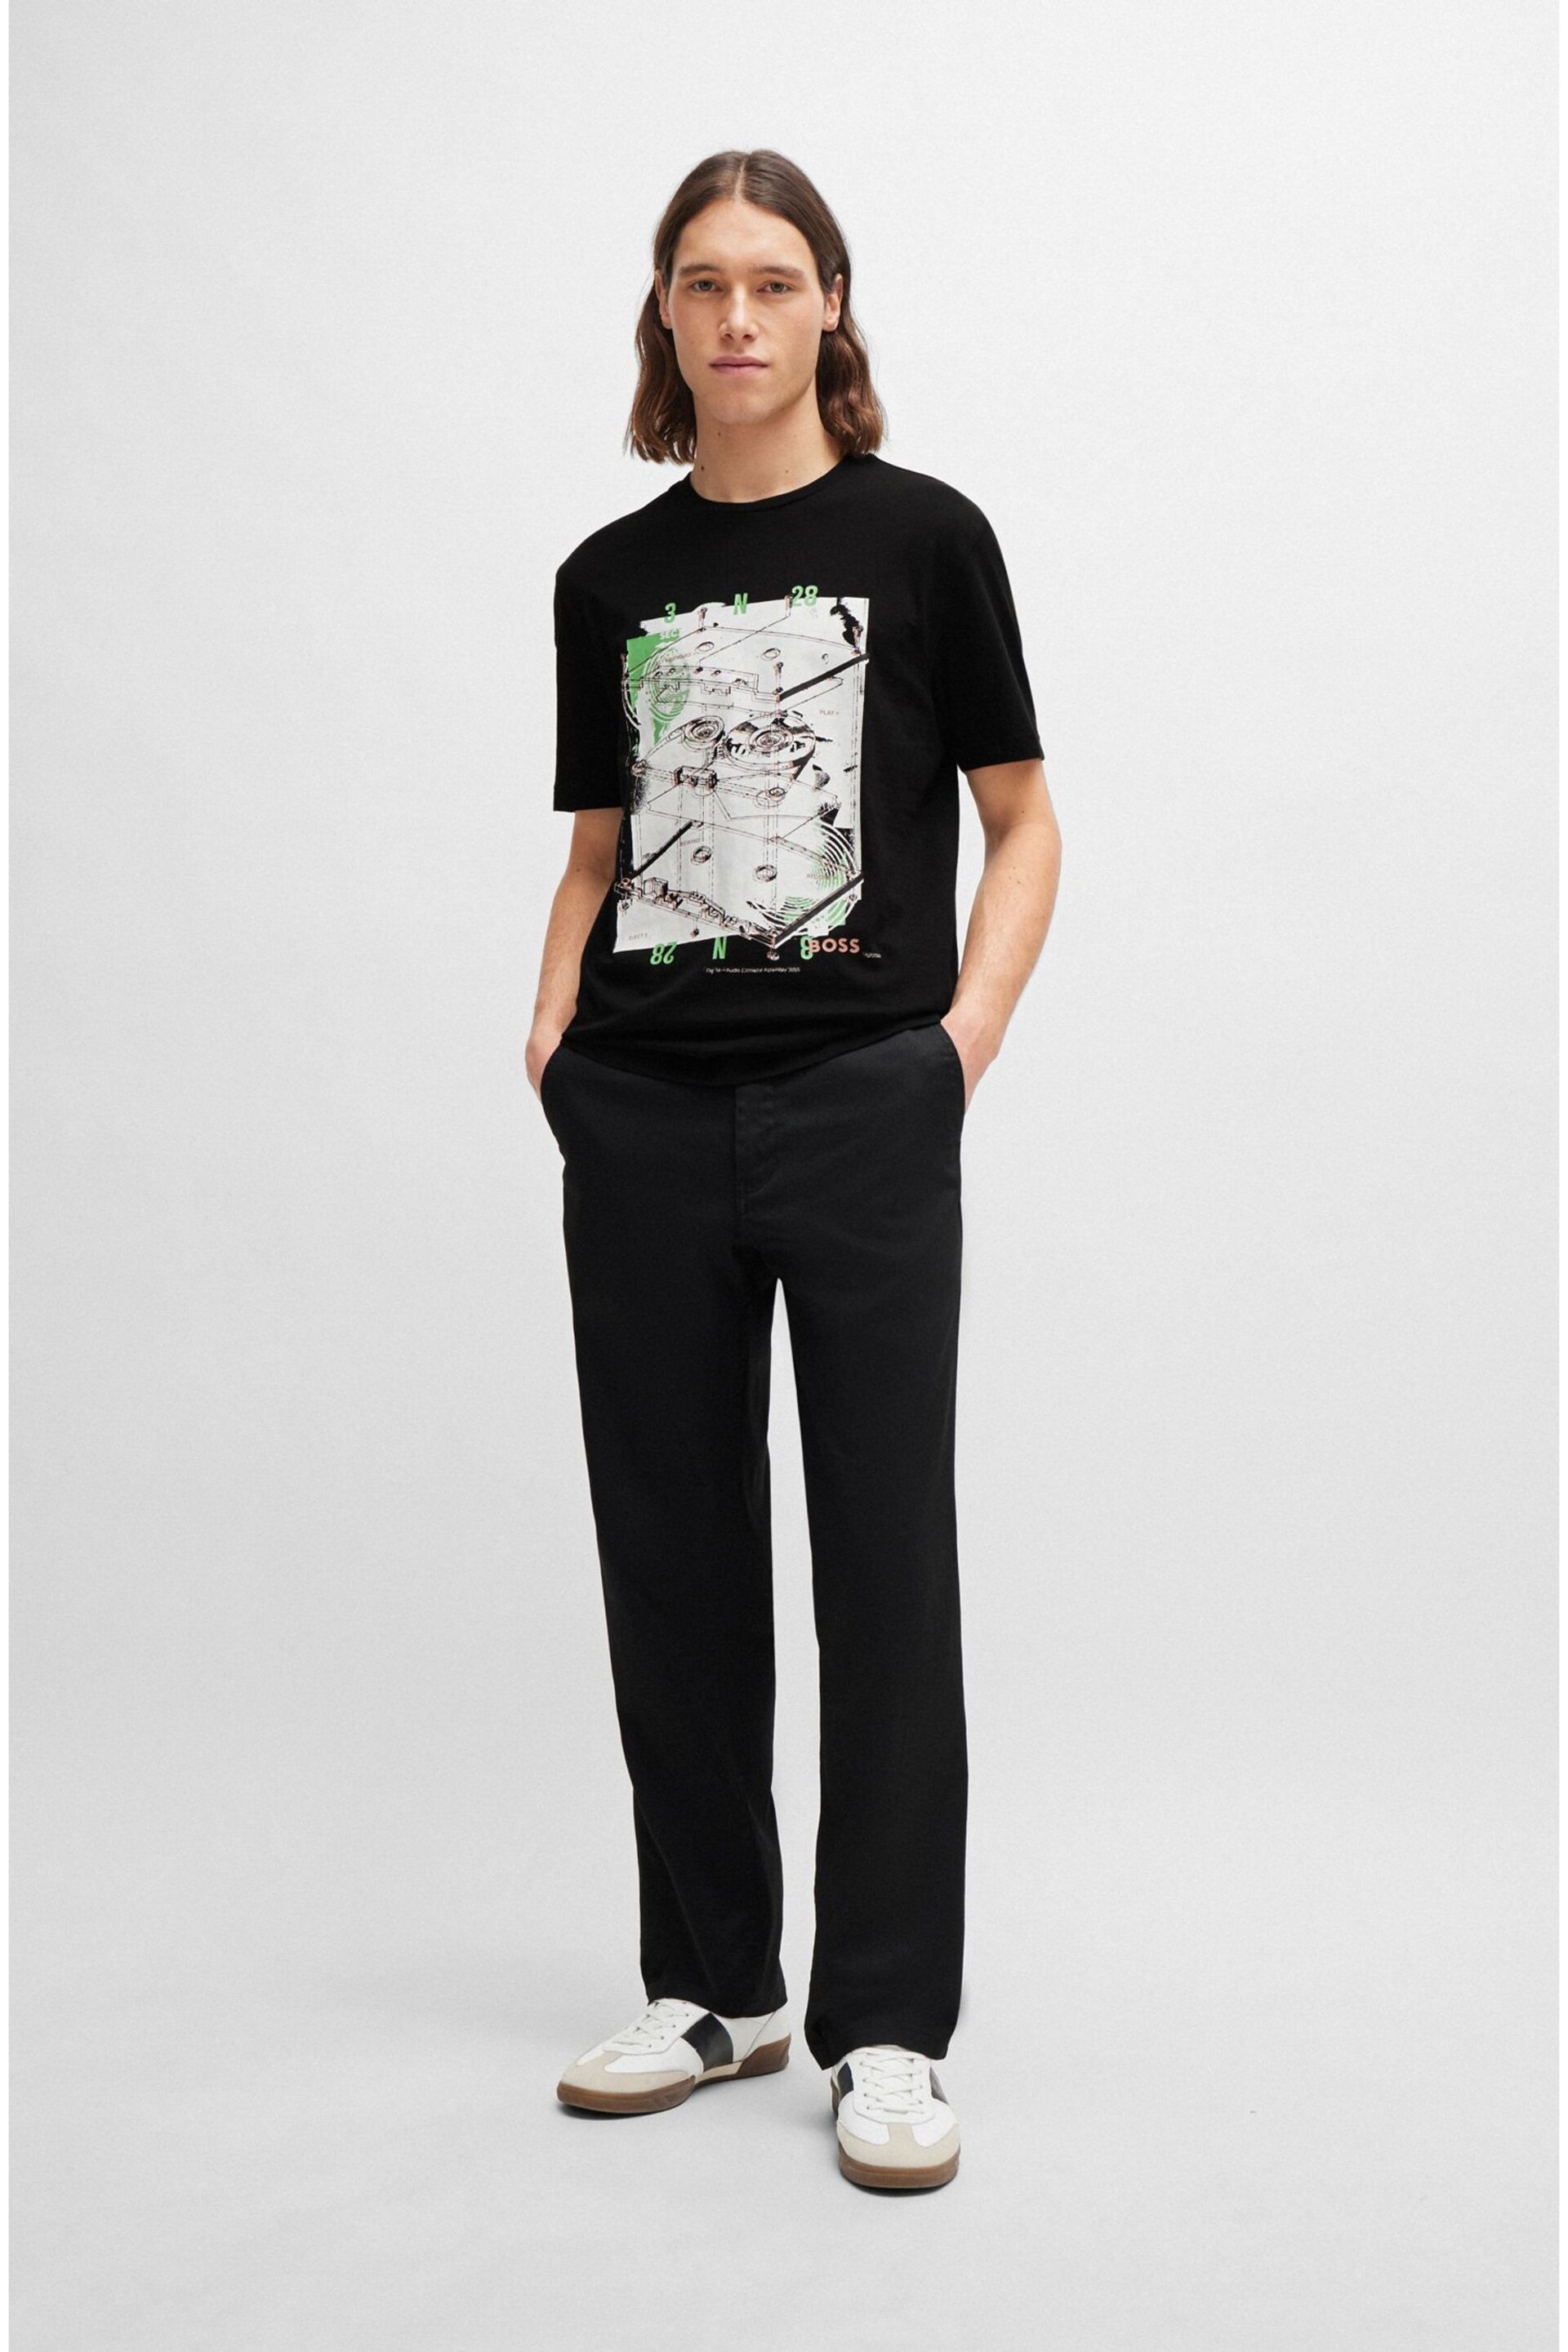 BOSS Black Graphic Print Cotton T-Shirt - Image 2 of 5